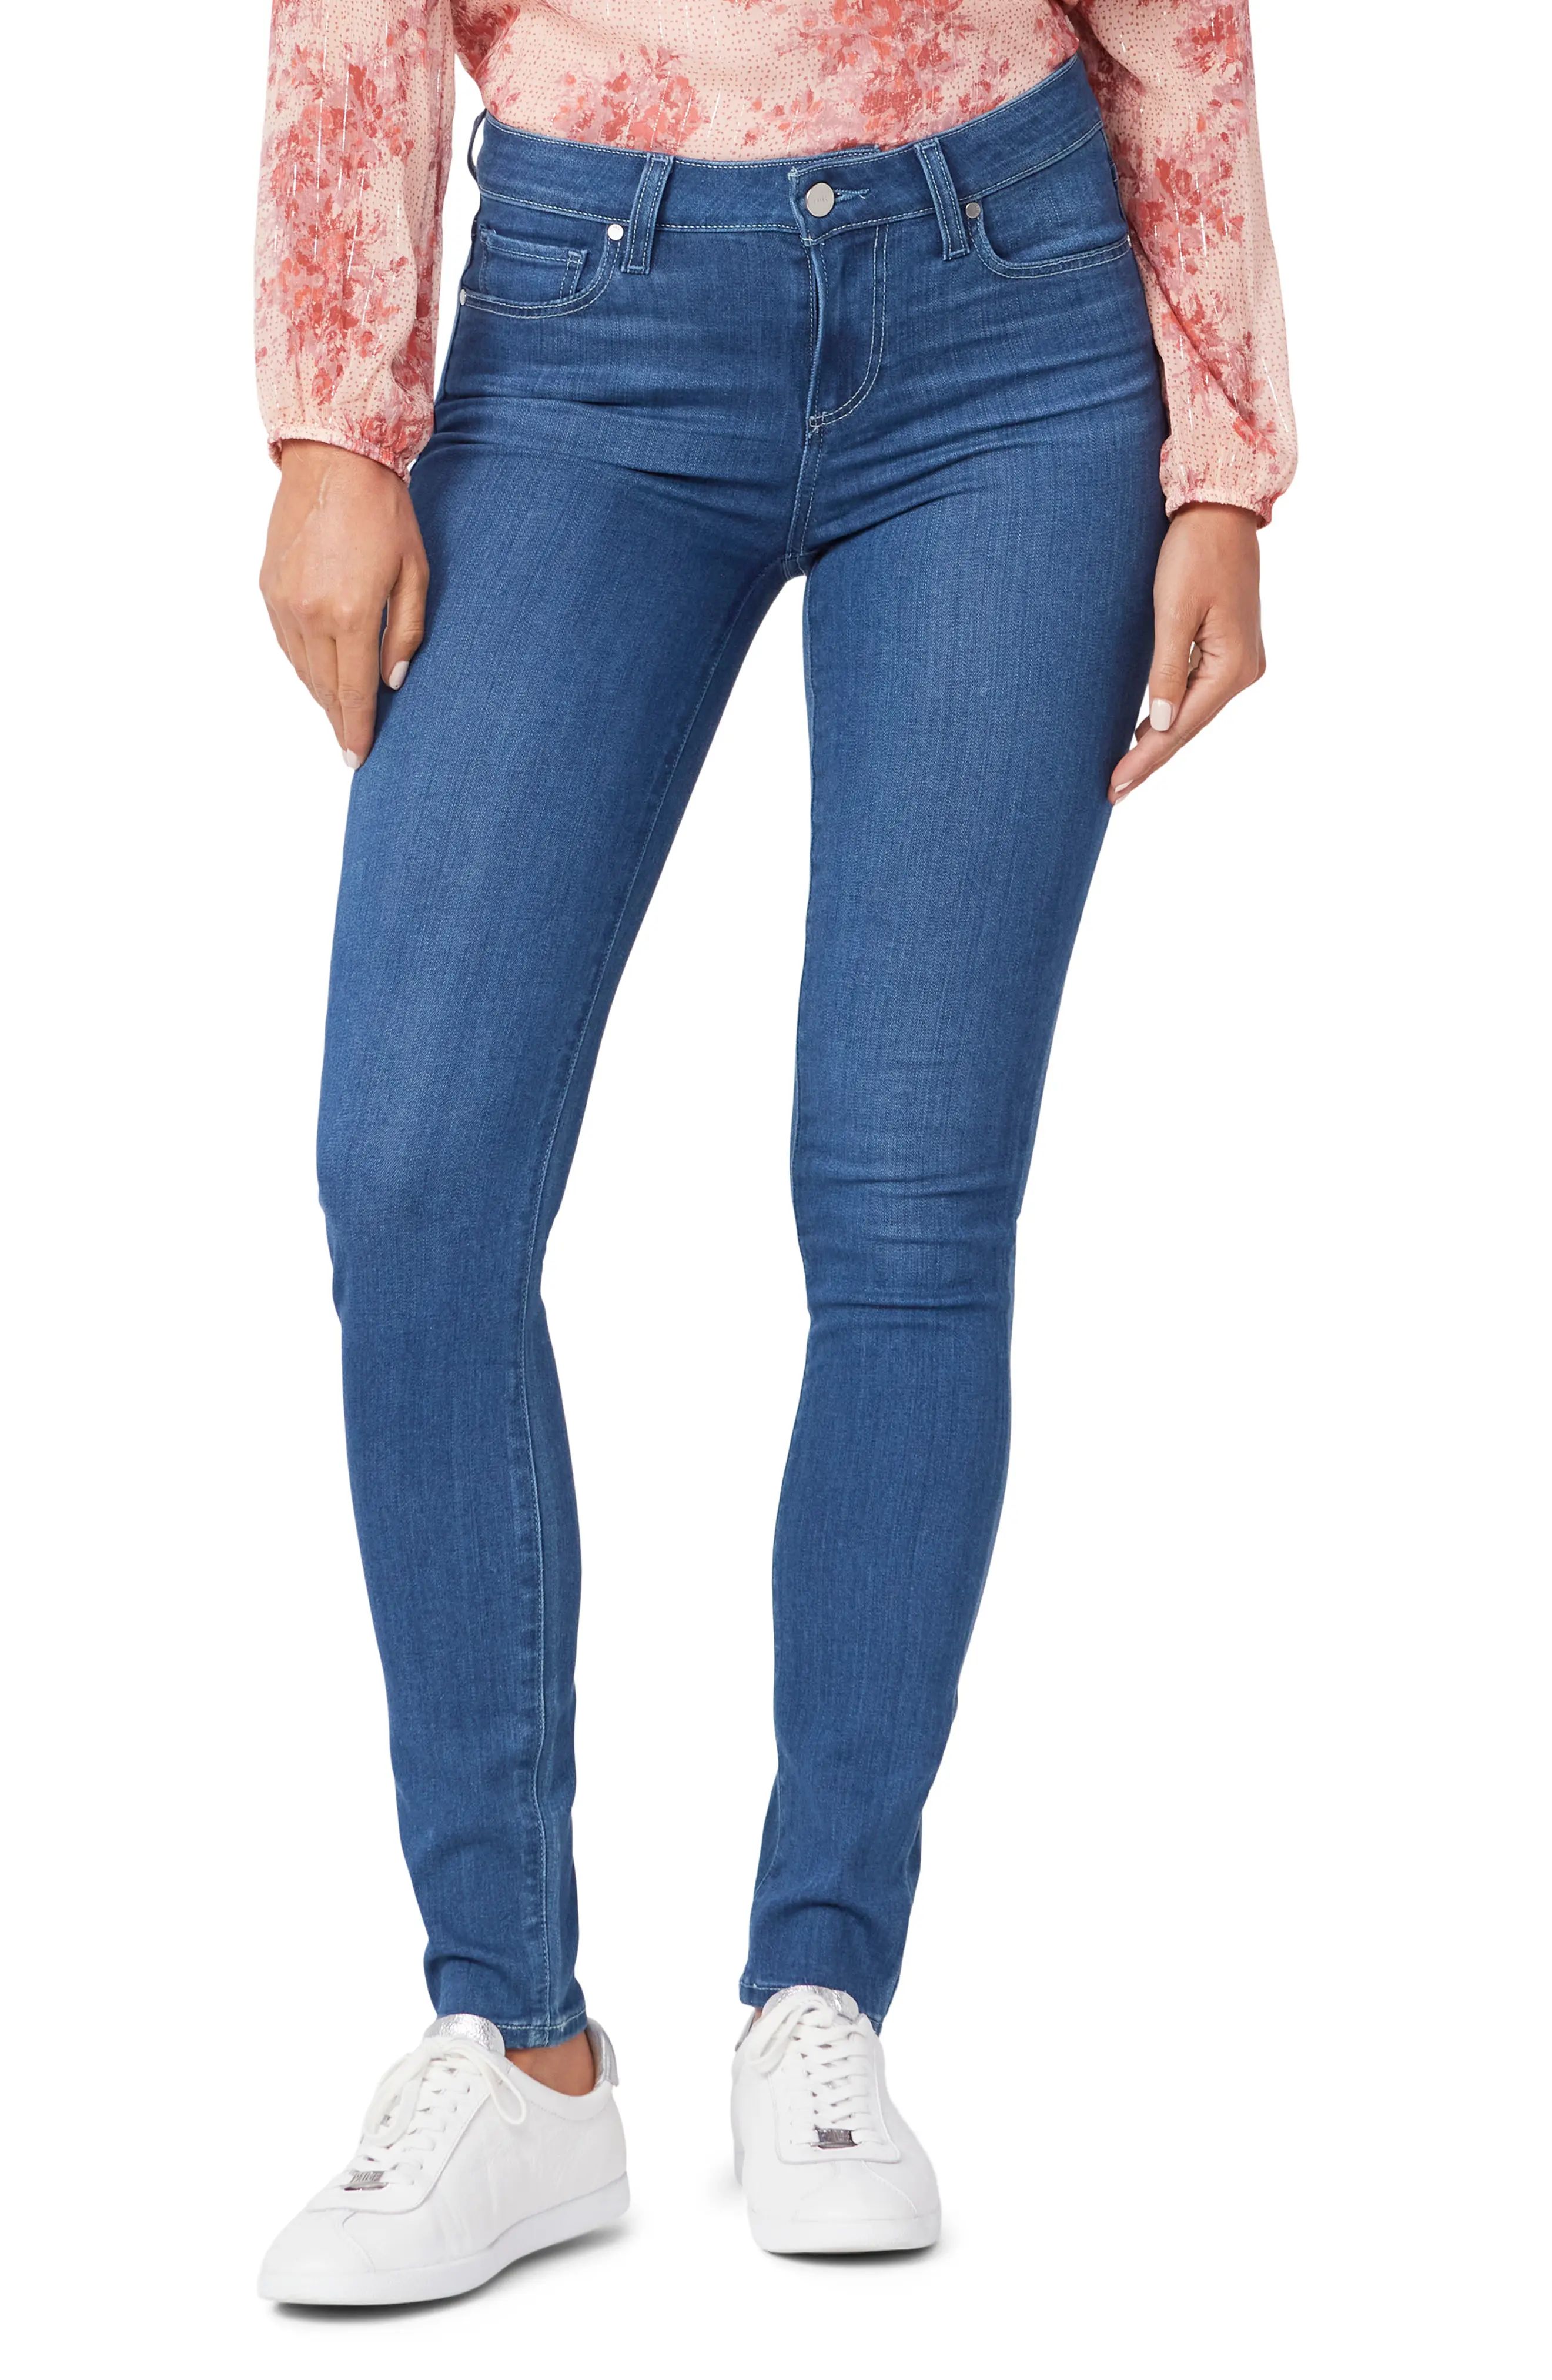 PAIGE Verdugo Ultra Skinny Jeans in Impression at Nordstrom, Size 23 | Nordstrom